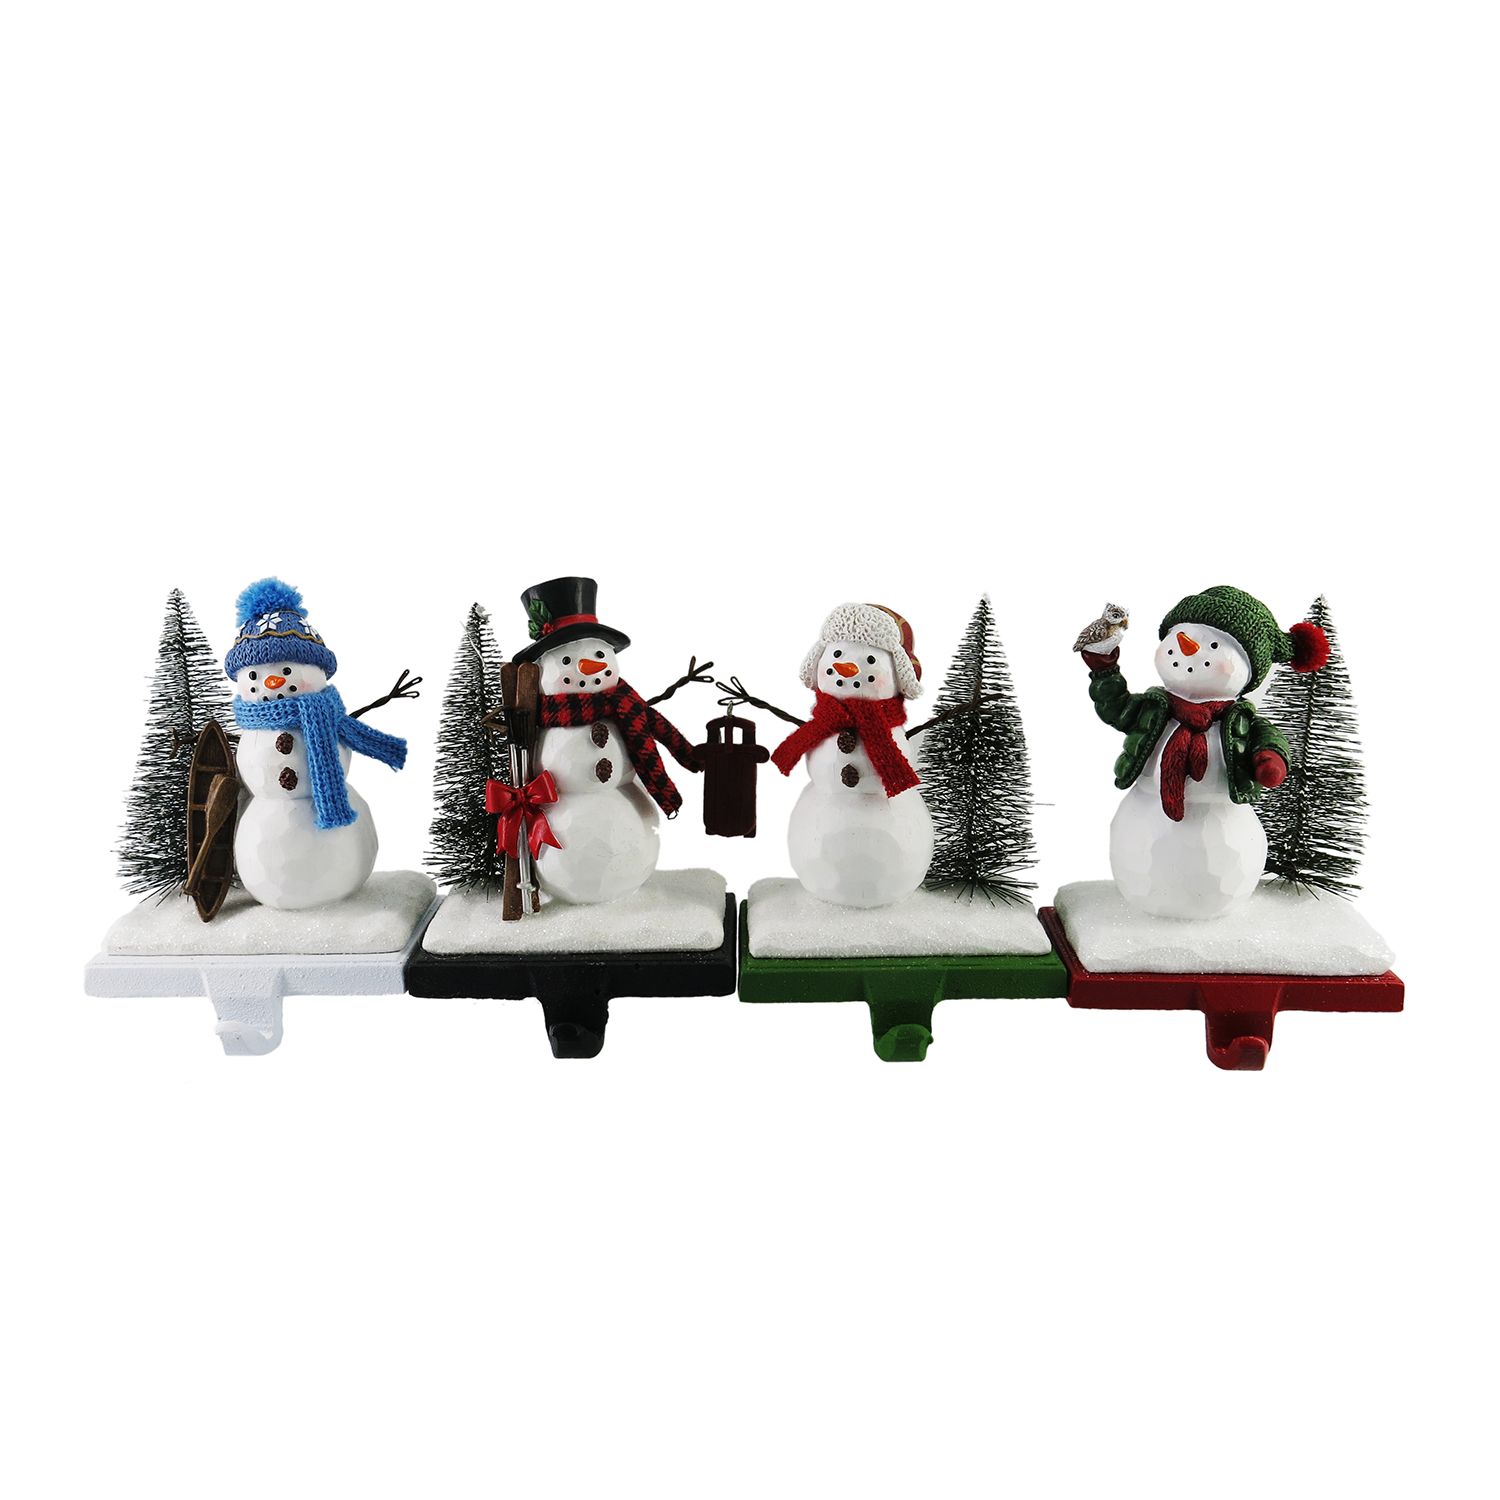 Details about   Eddie Bauer Brushed Chrome Snowman Christmas Stocking Holder Hanger 